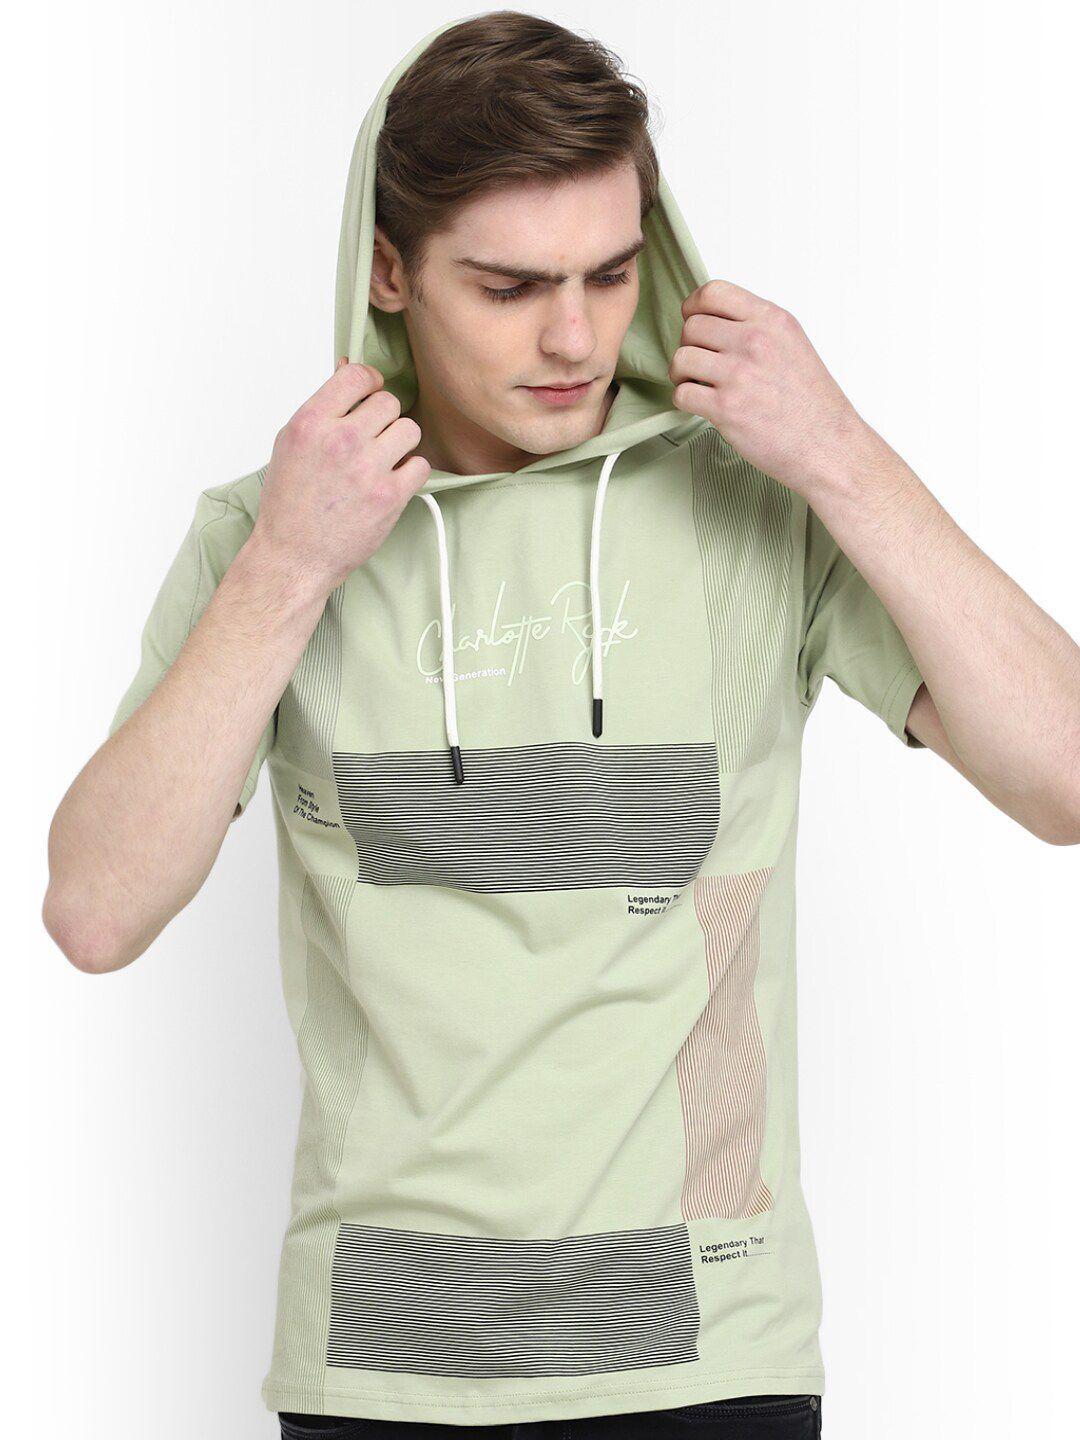 v-mart striped hooded cotton t-shirt